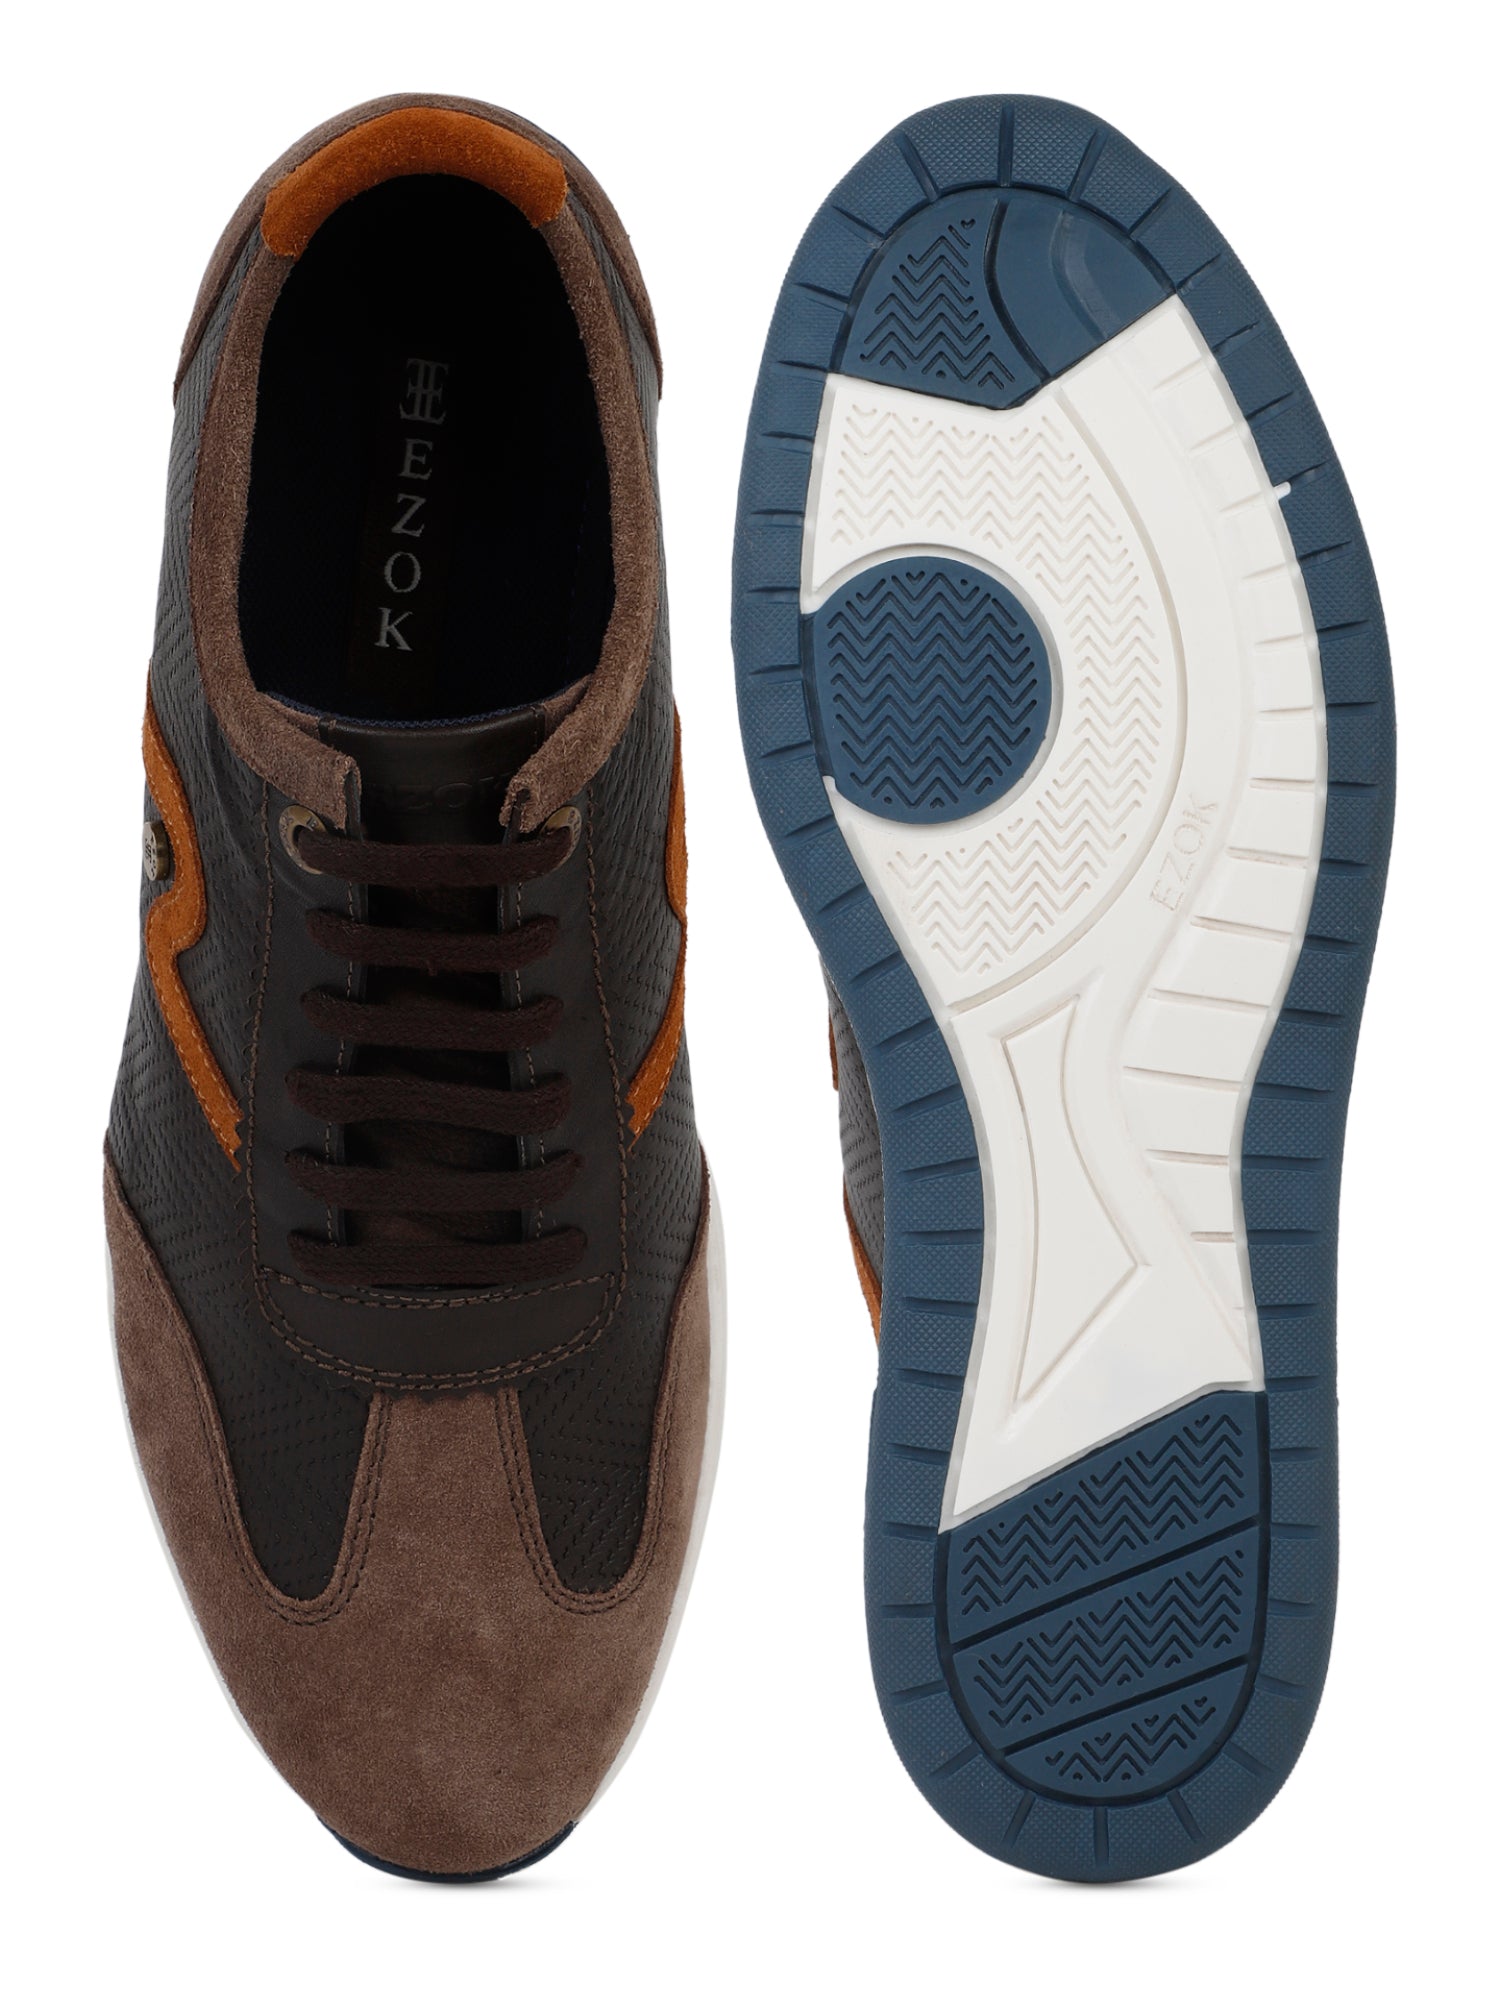 Ezok Men Brown Sneaker Casual Shoes